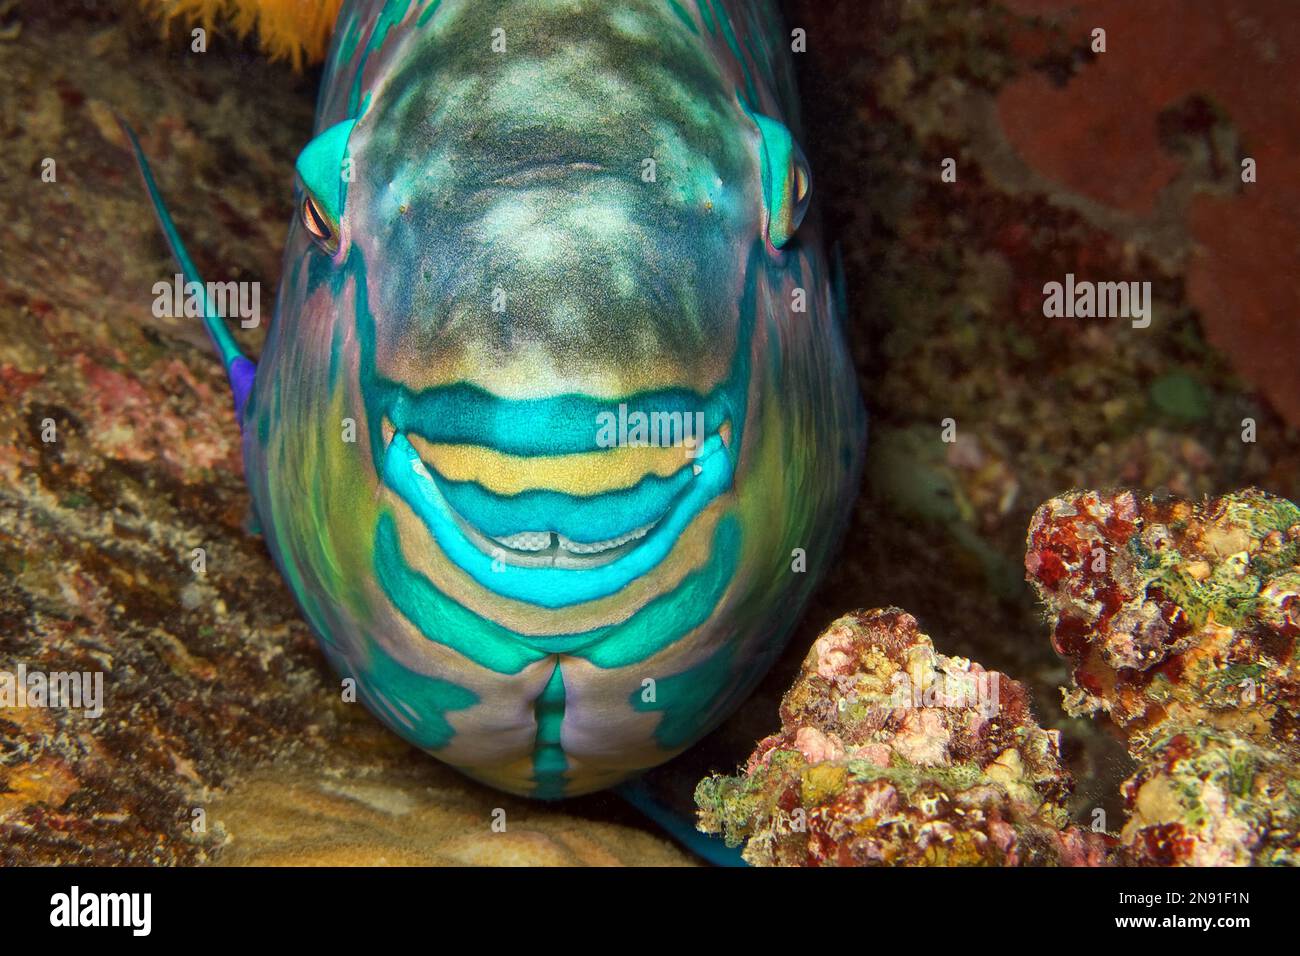 Eclipse parrotfish - Scarus russelii Stock Photo